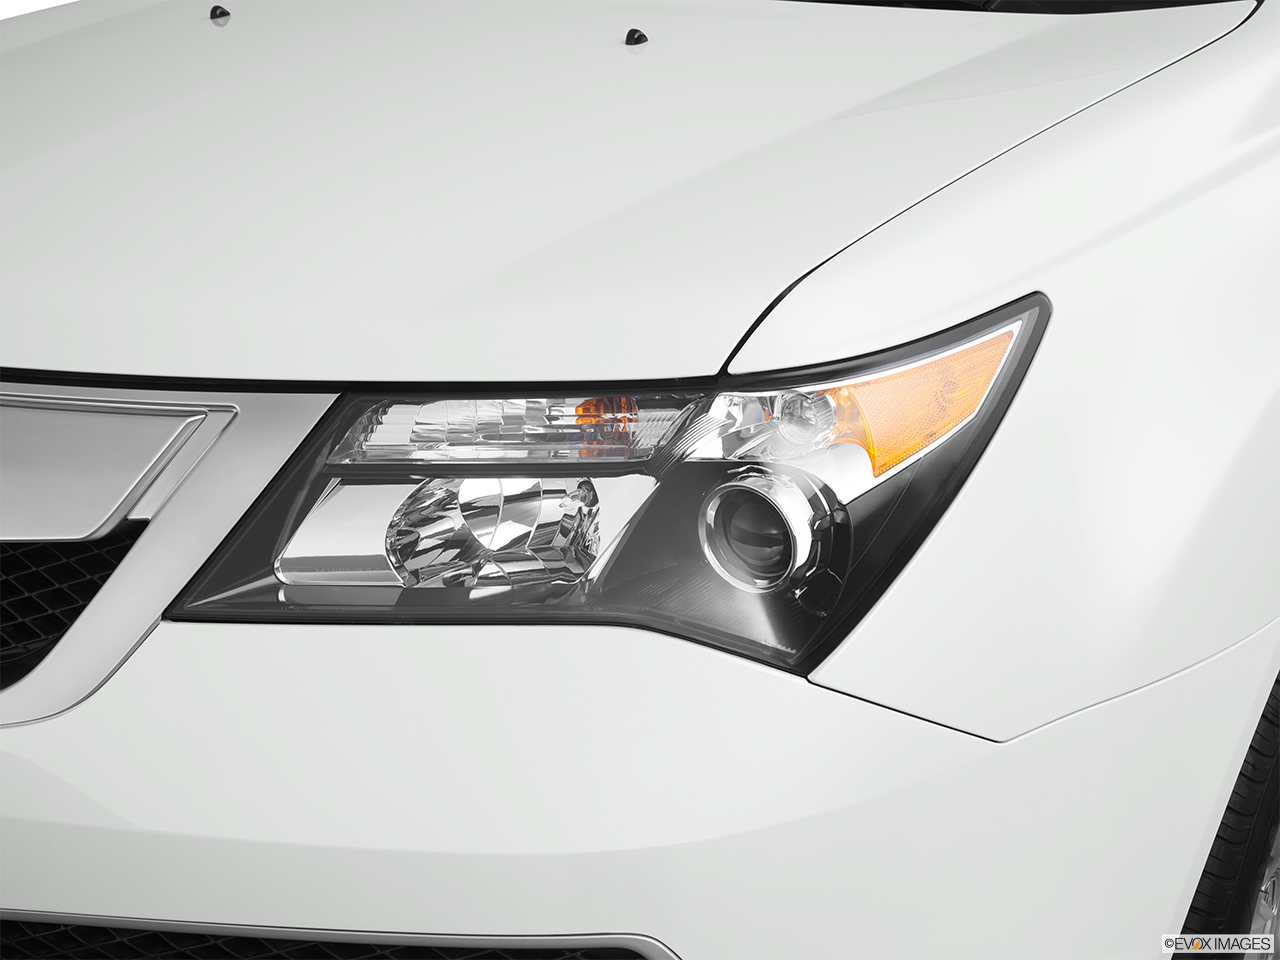 2011 Acura MDX MDX Drivers Side Headlight. 